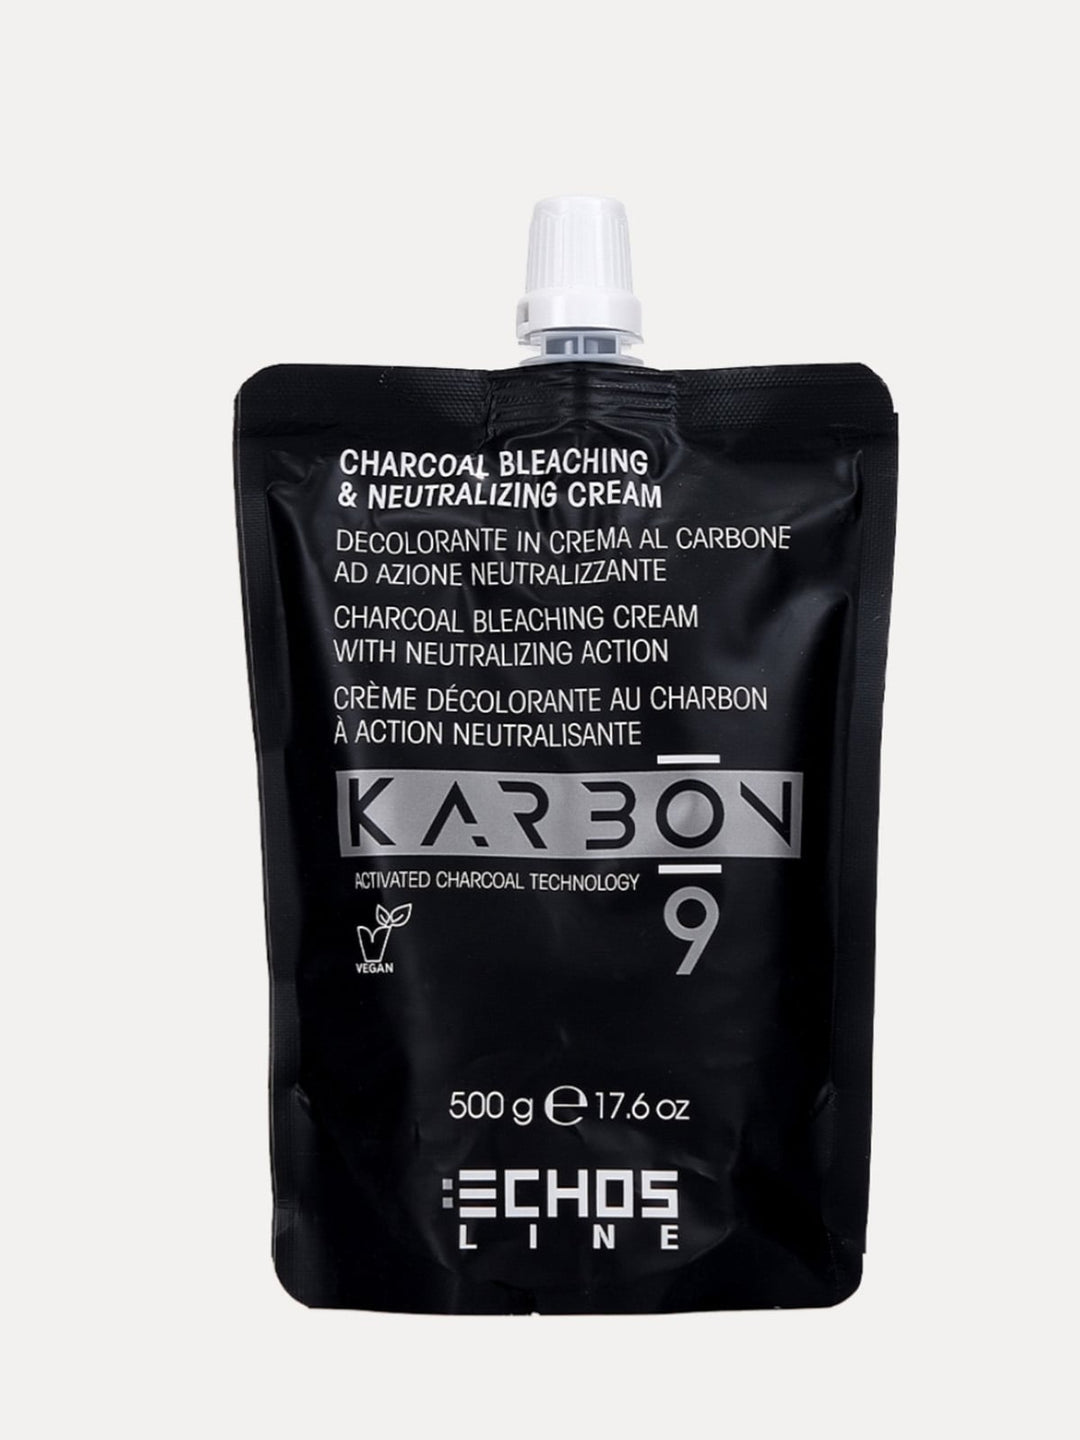 Charcoal Bleaching & Neutralizing Cream | Echosline